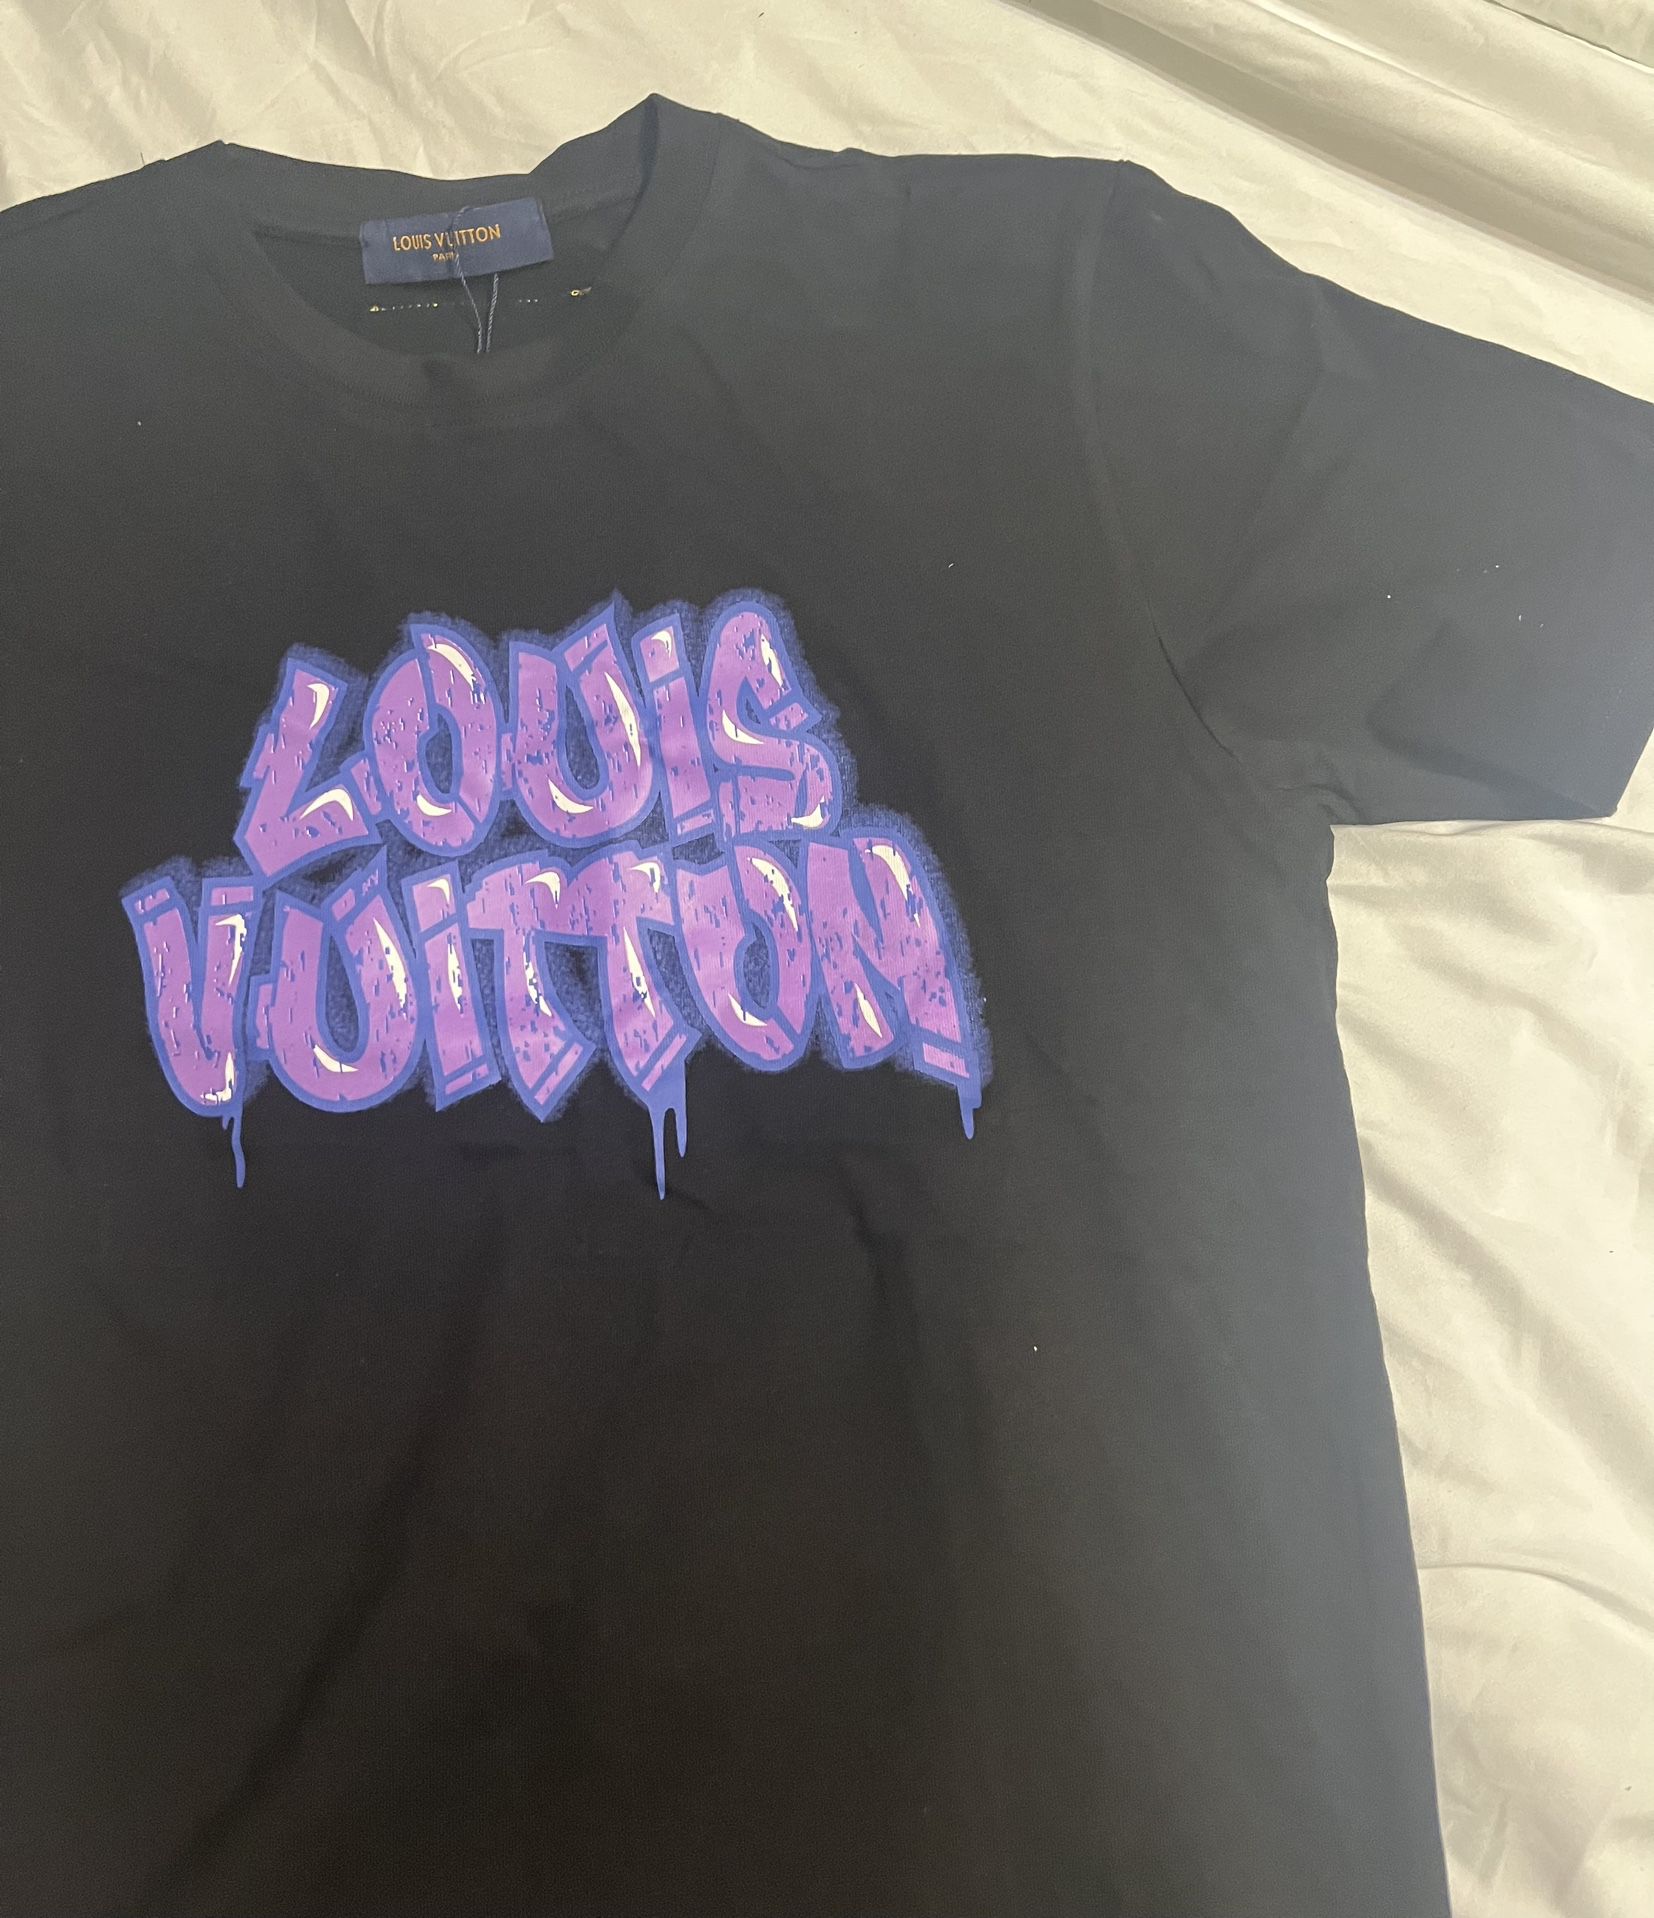 Louis Vuitton Shirt for Sale in Dublin, CA - OfferUp